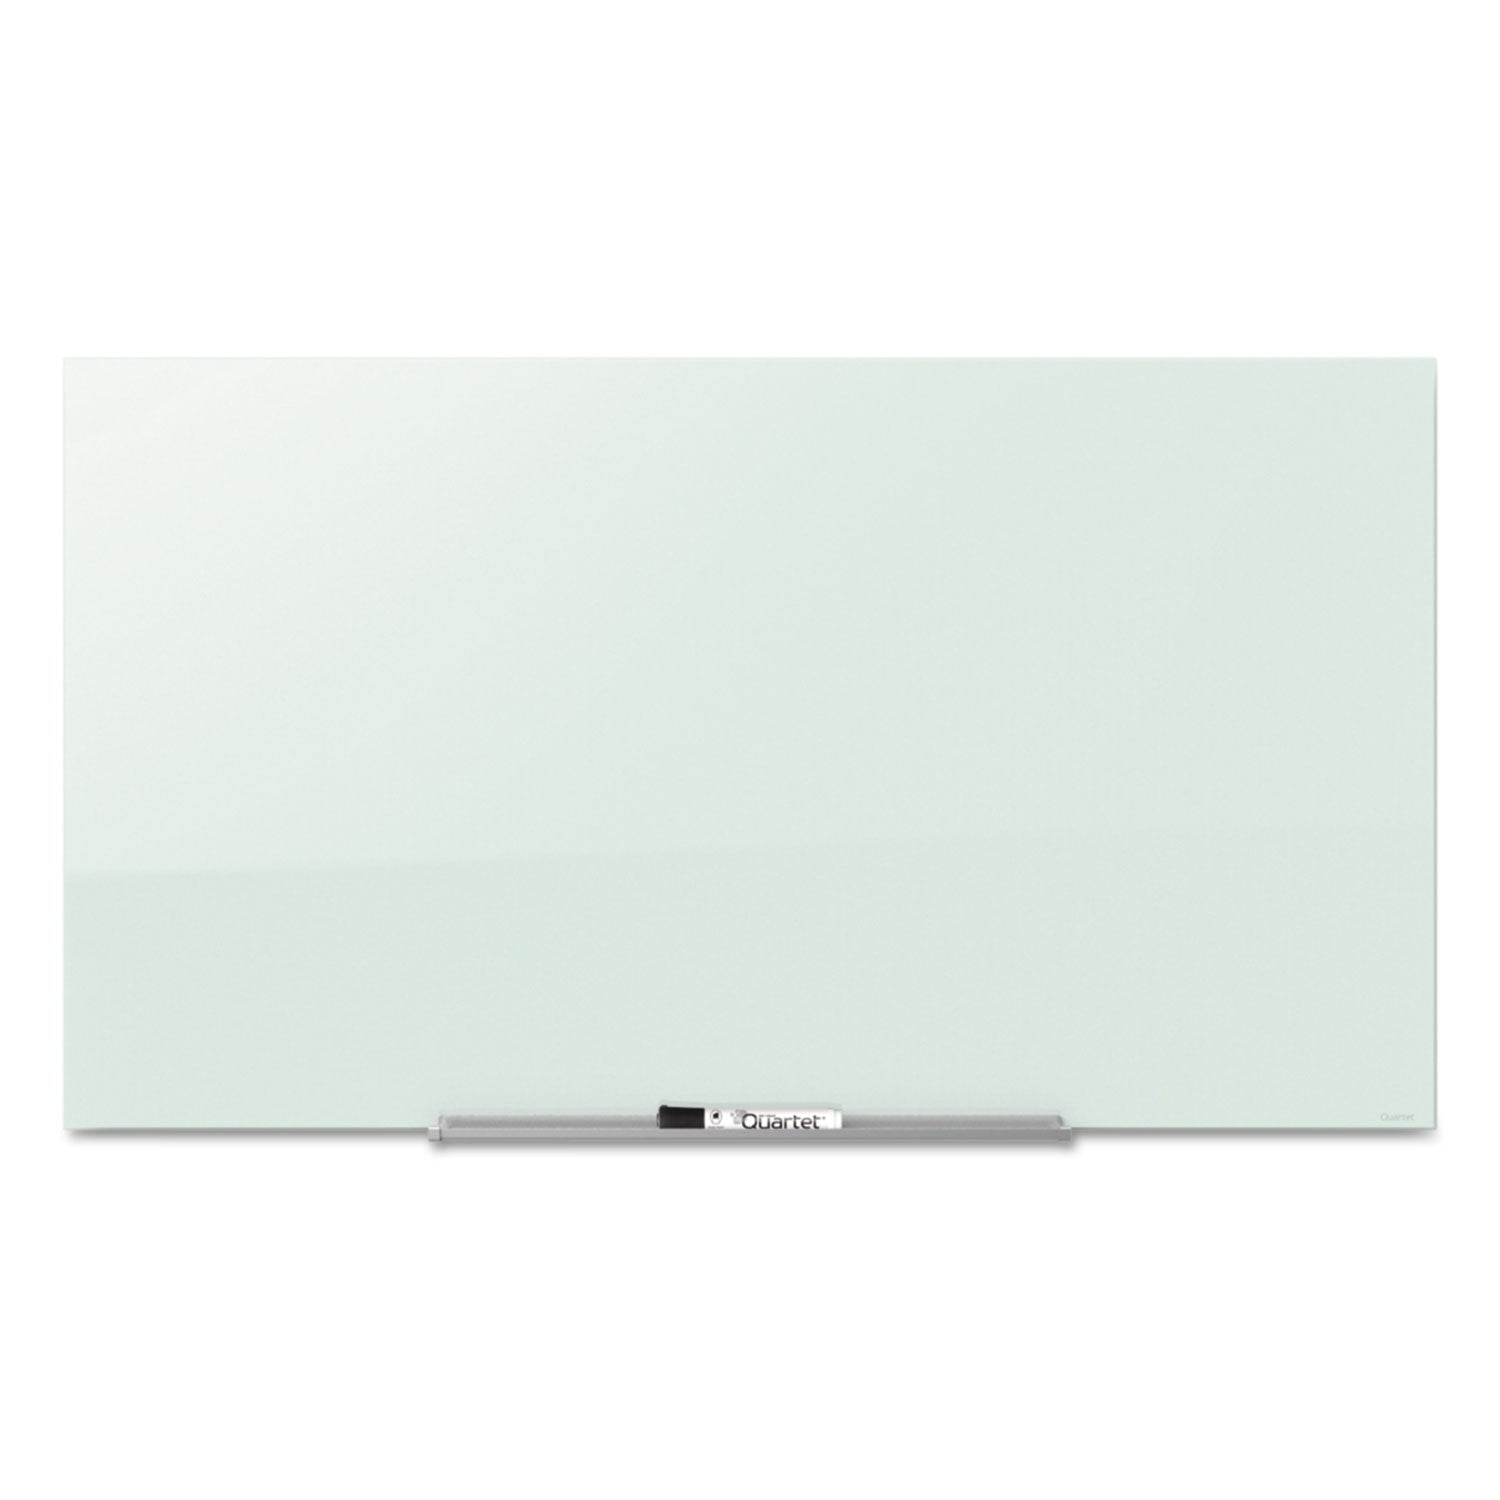 invisamount-magnetic-glass-marker-board-85-x-48-white-surface_qrtg8548imw - 1